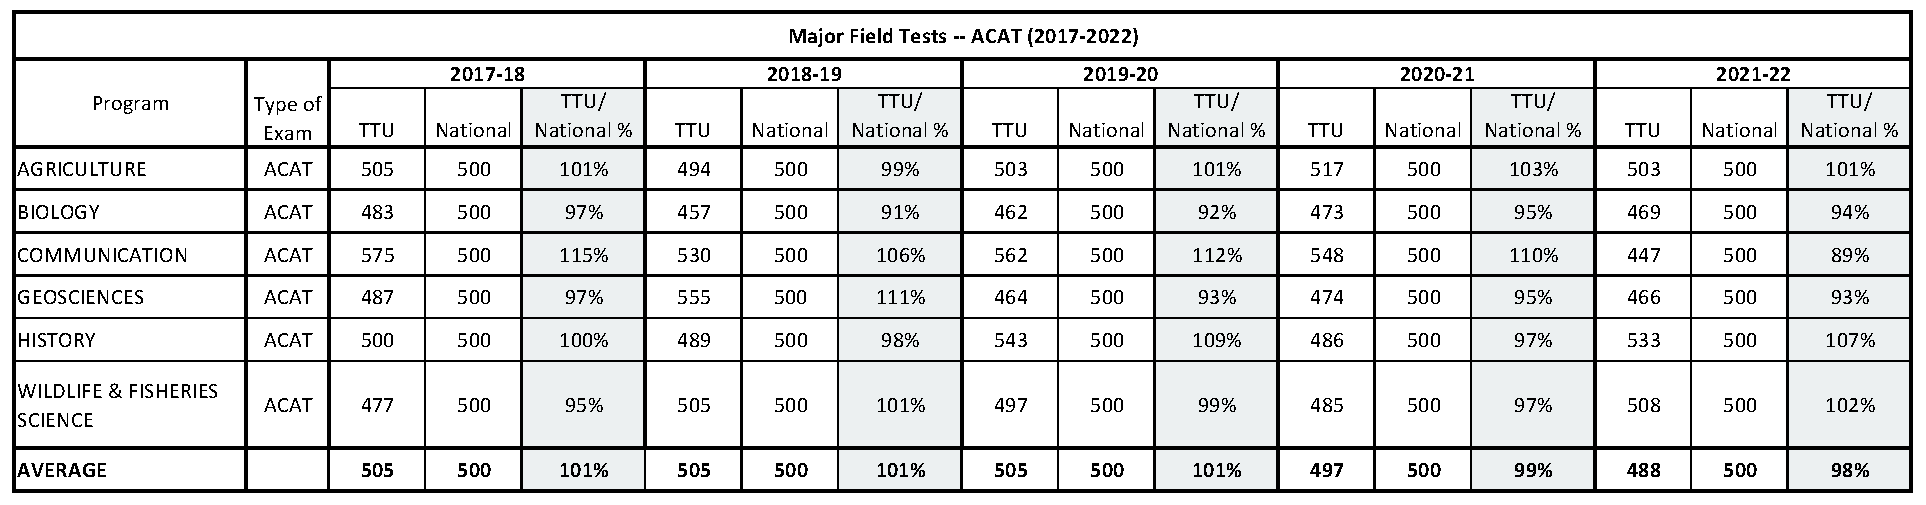 ACAT Major Field Test Data